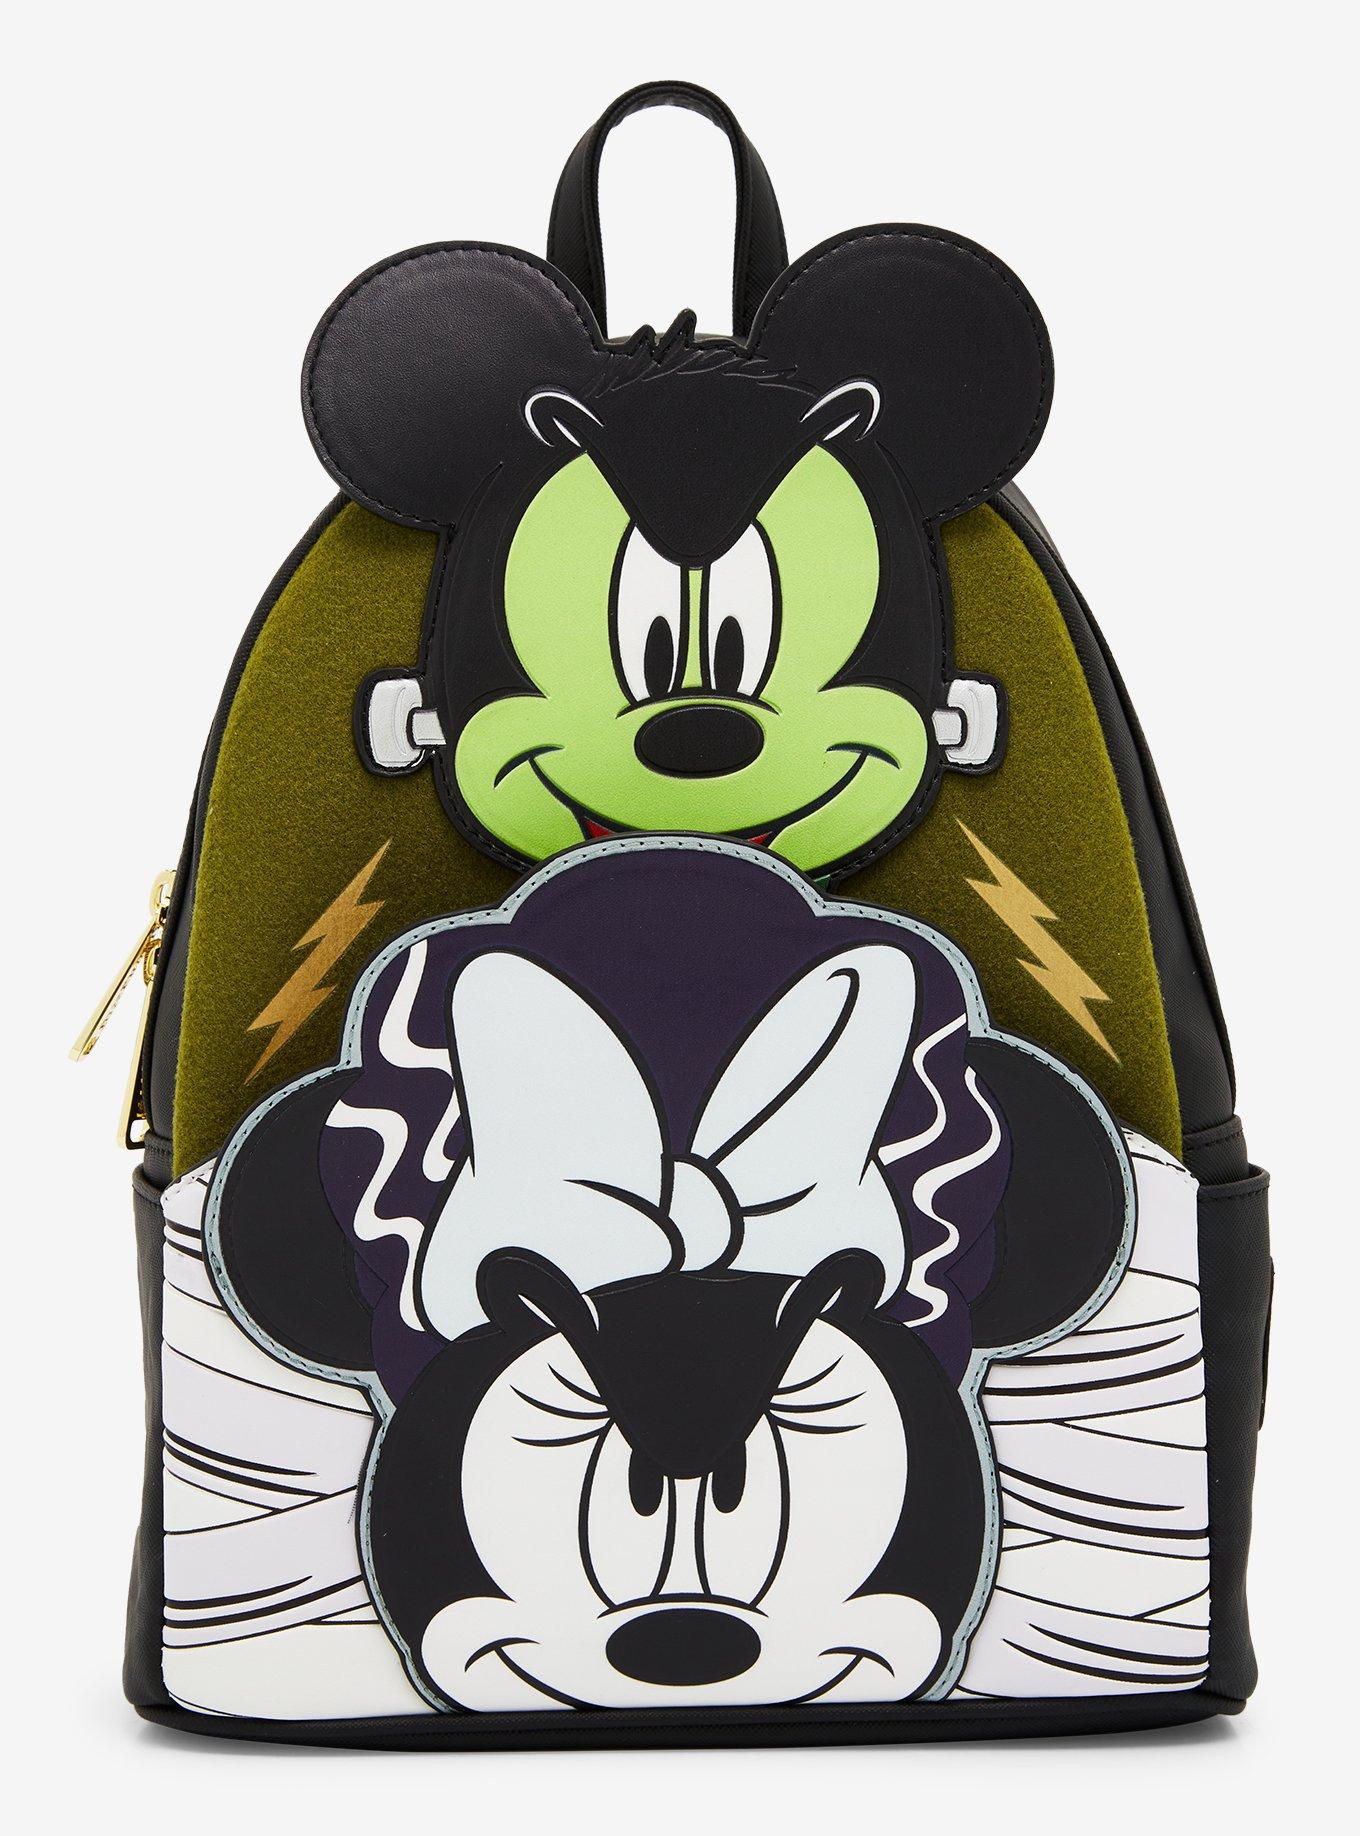 Angry Mickey Mouse Handbag + Purse Disney